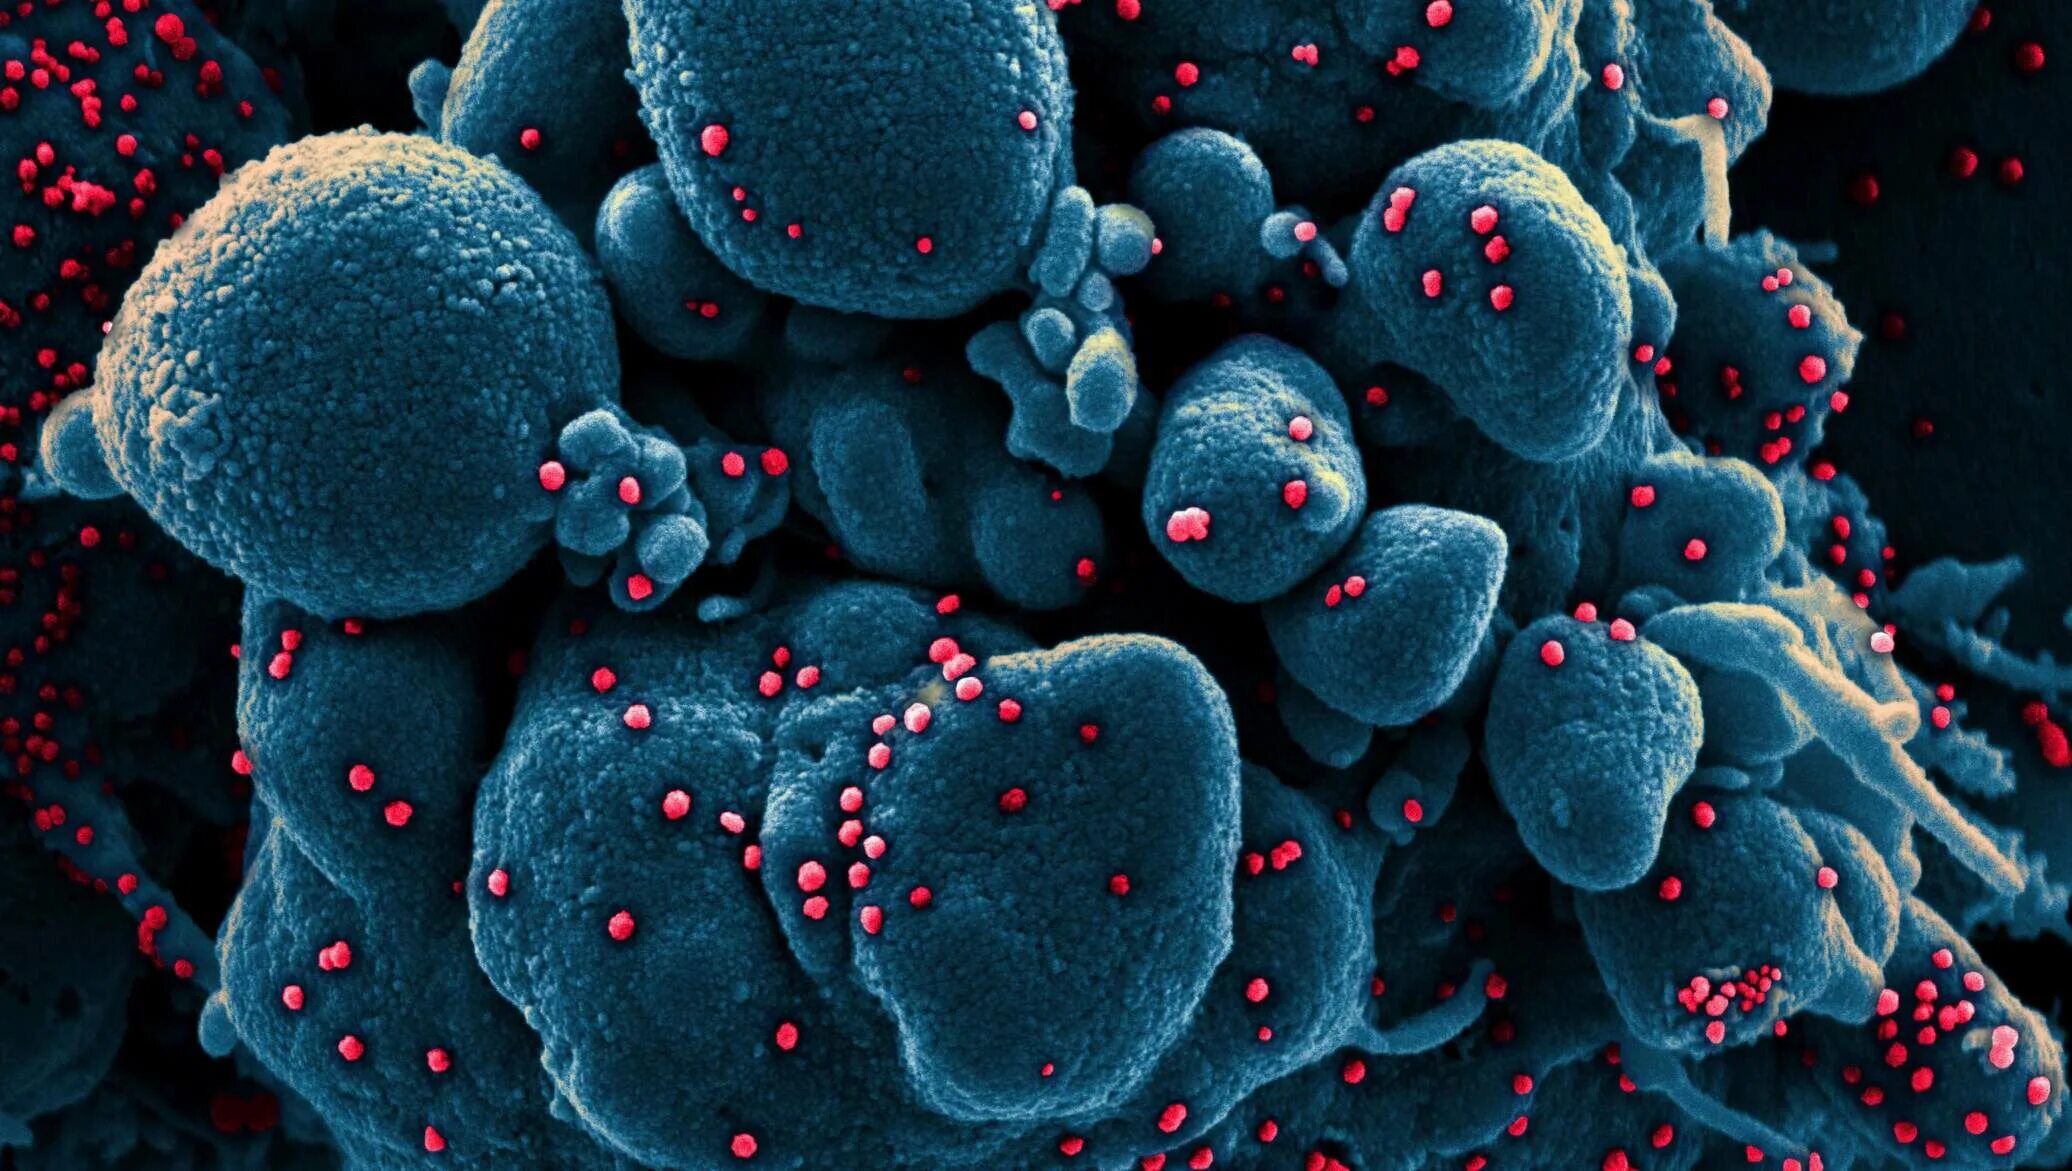 Атакующие клетки. SARS cov 19 под микроскопом. Вирус ковид 19 под микроскопом. Вирус коронавирус под микроскопом. Бактерия коронавируса под микроскопом.